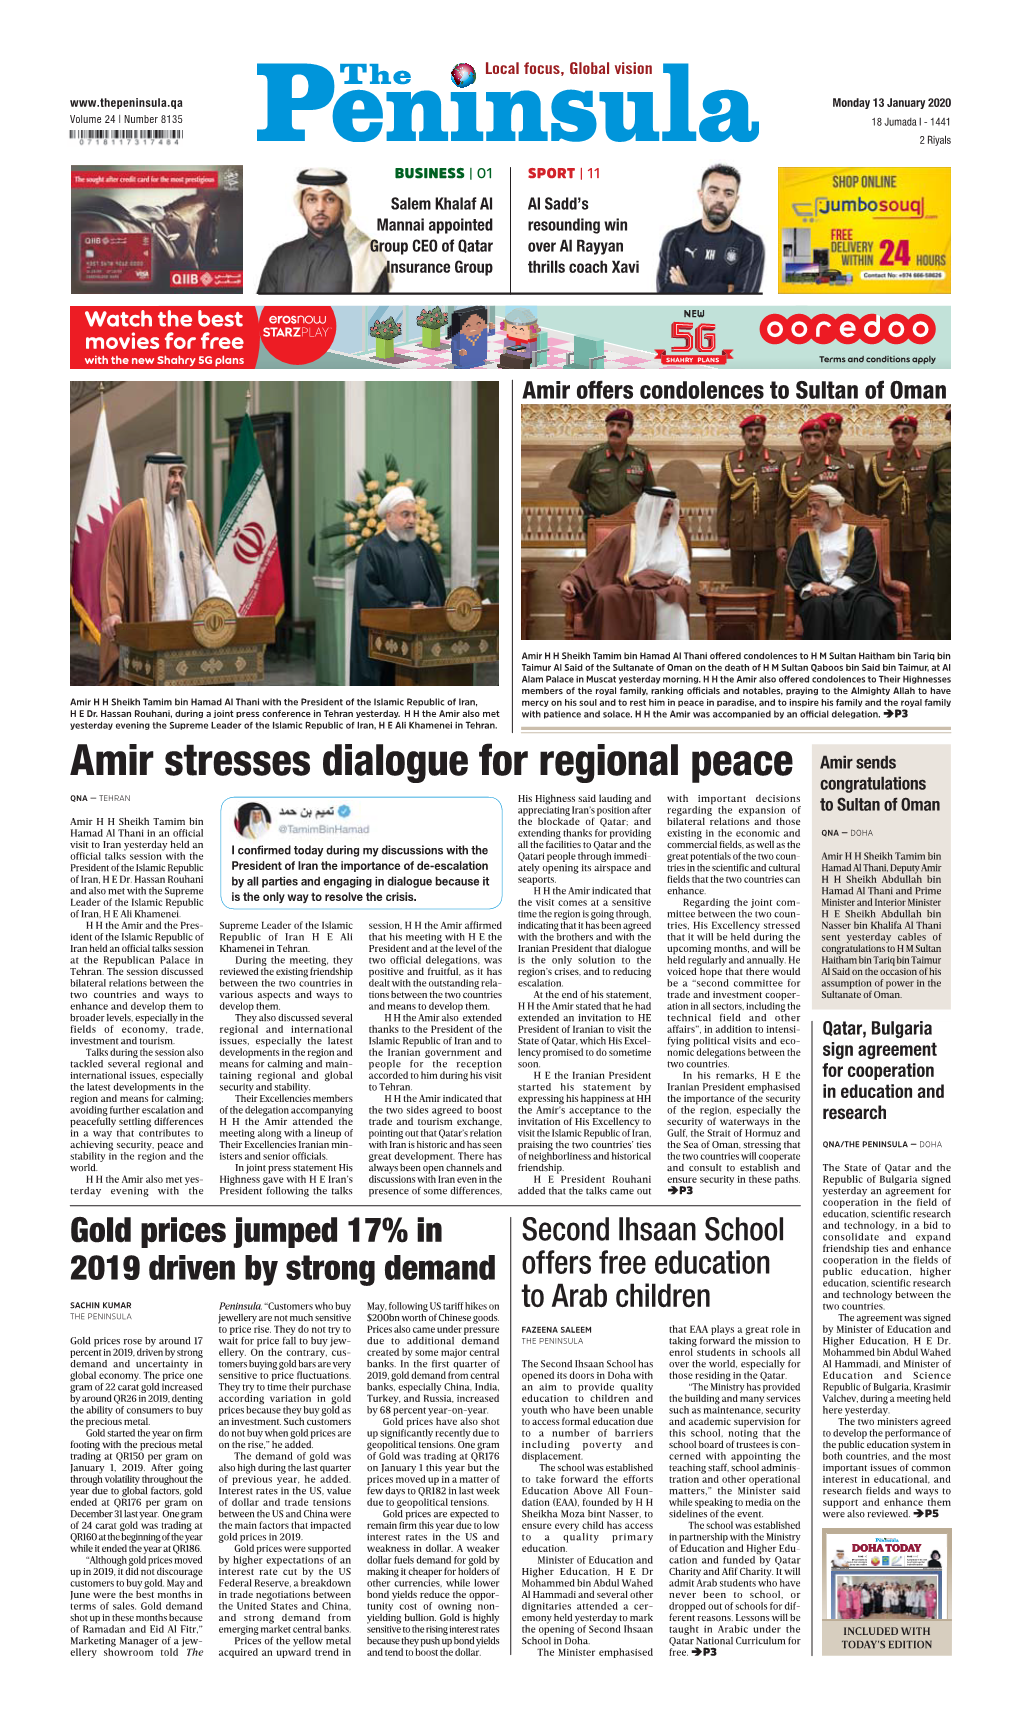 Amir Stresses Dialogue for Regional Peace